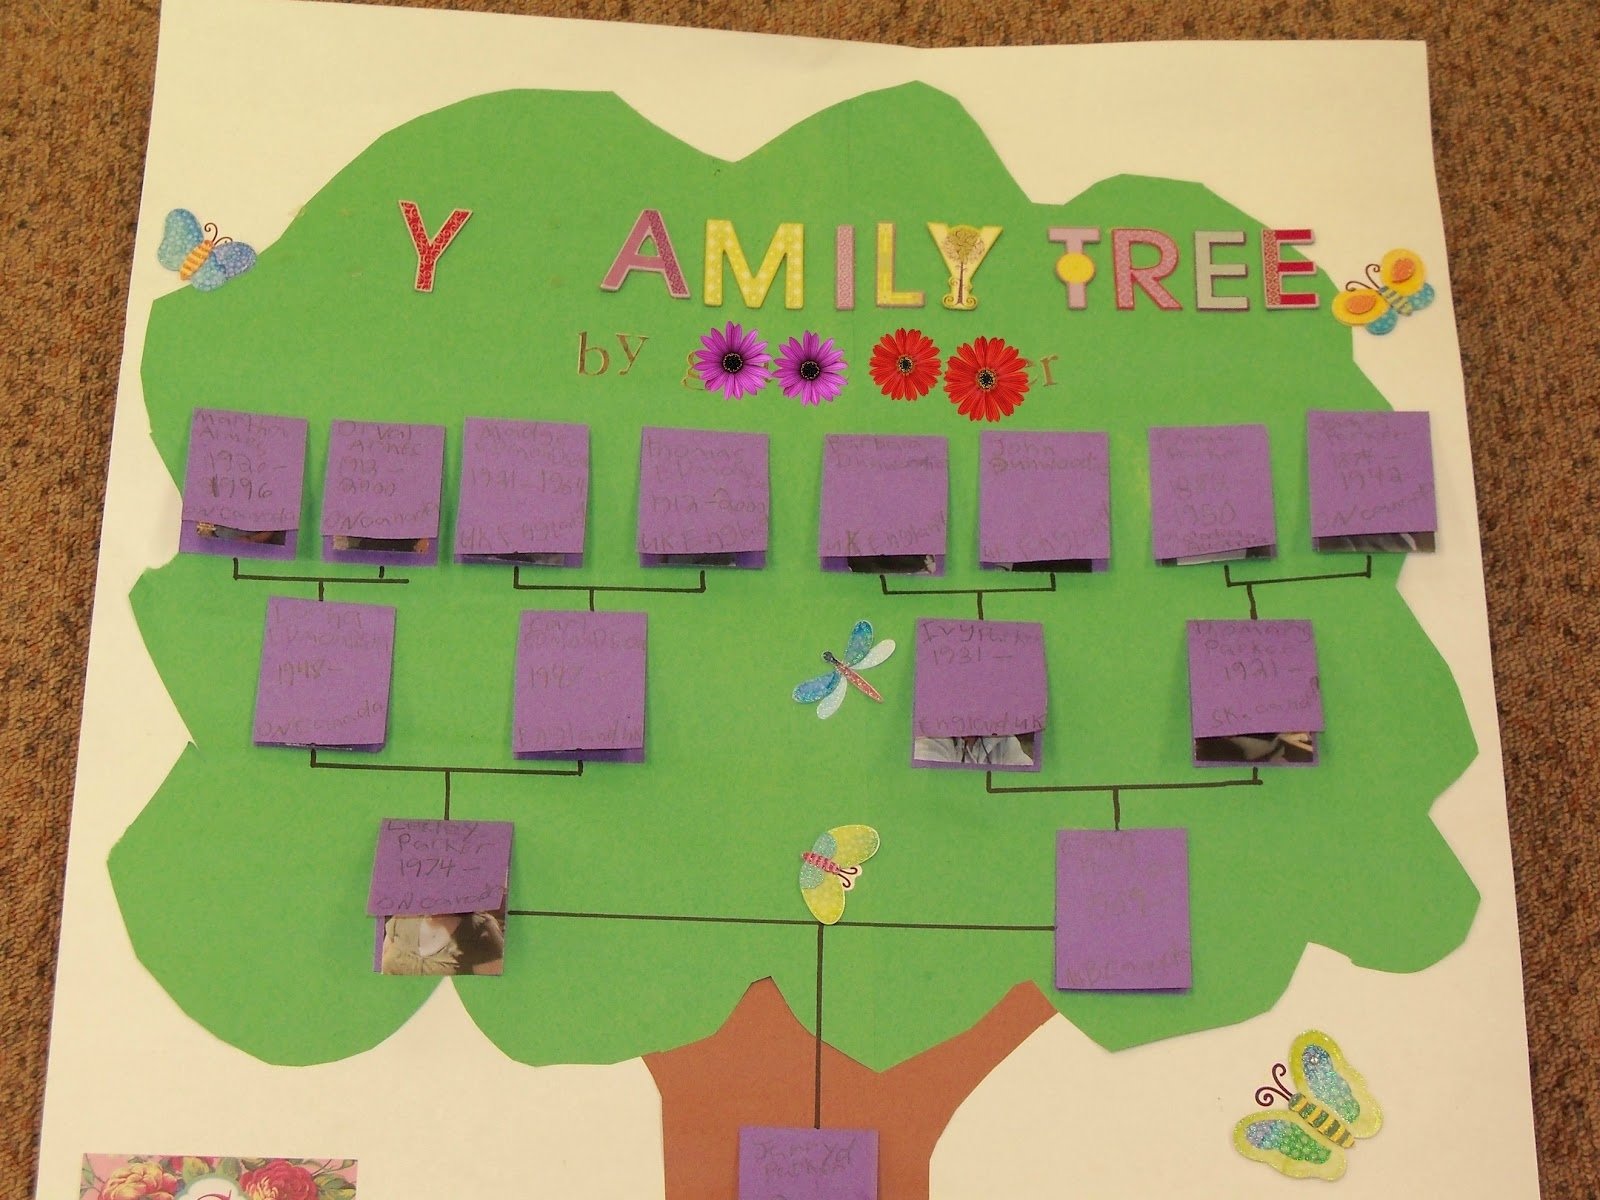 homework on family tree